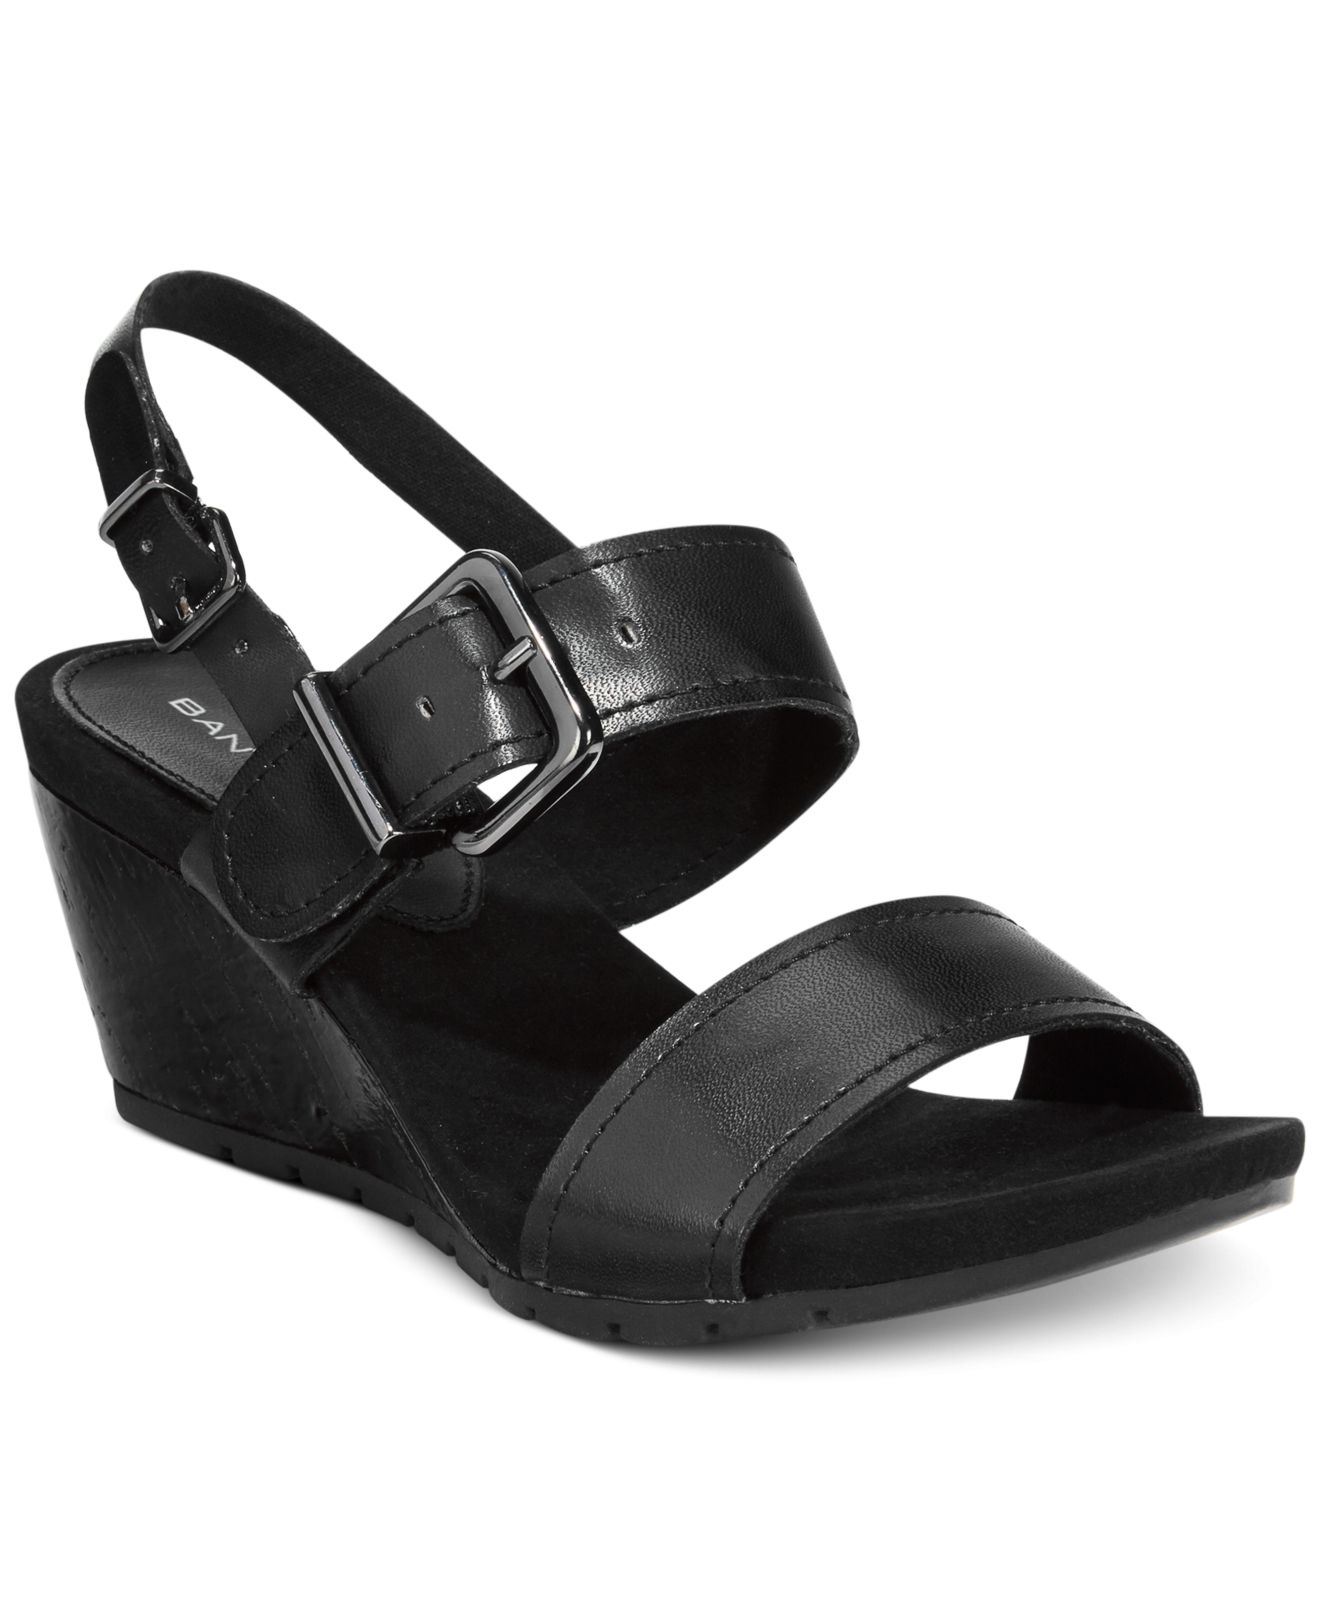 Lyst - Bandolino Gladis Double Strap Wedge Sandals in Black